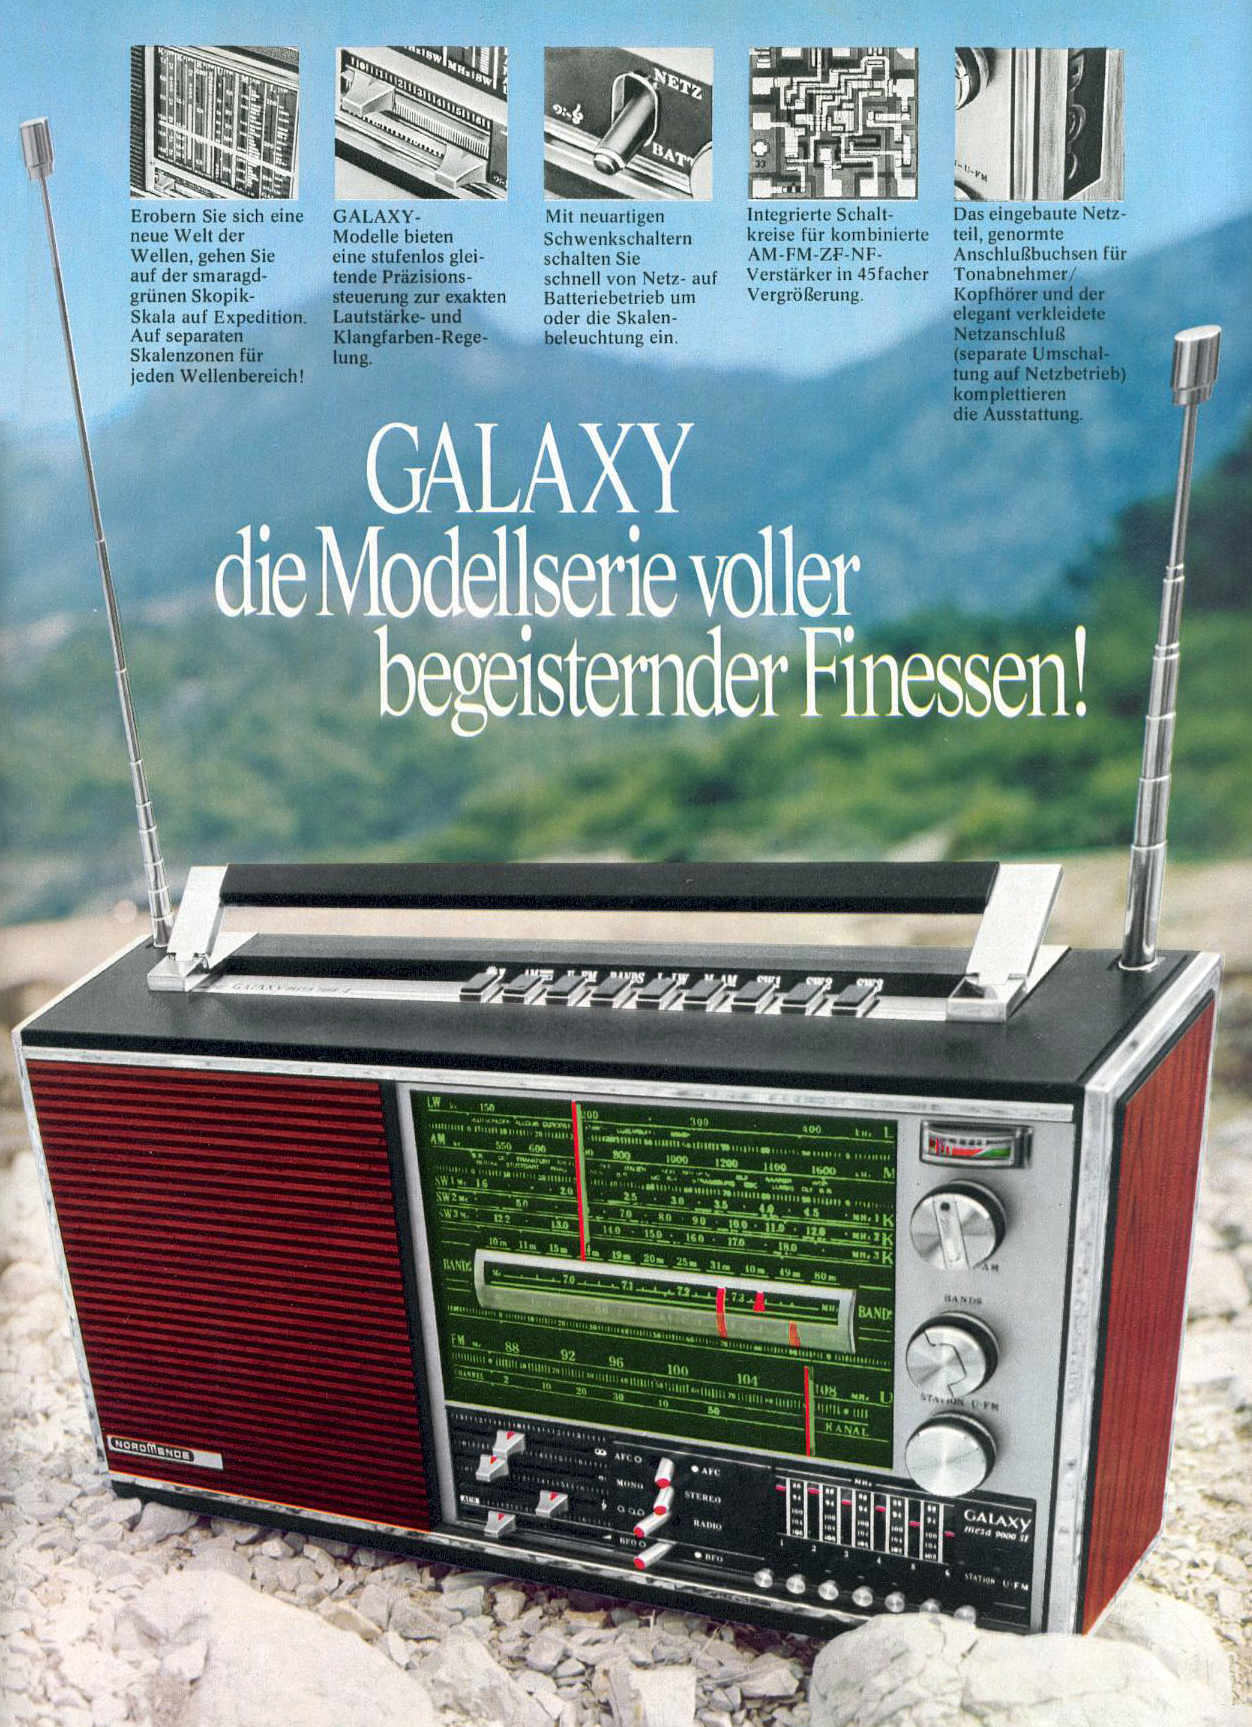 Nordmende Galaxy Mesa 9000 st-Prospekt-1974.jpg